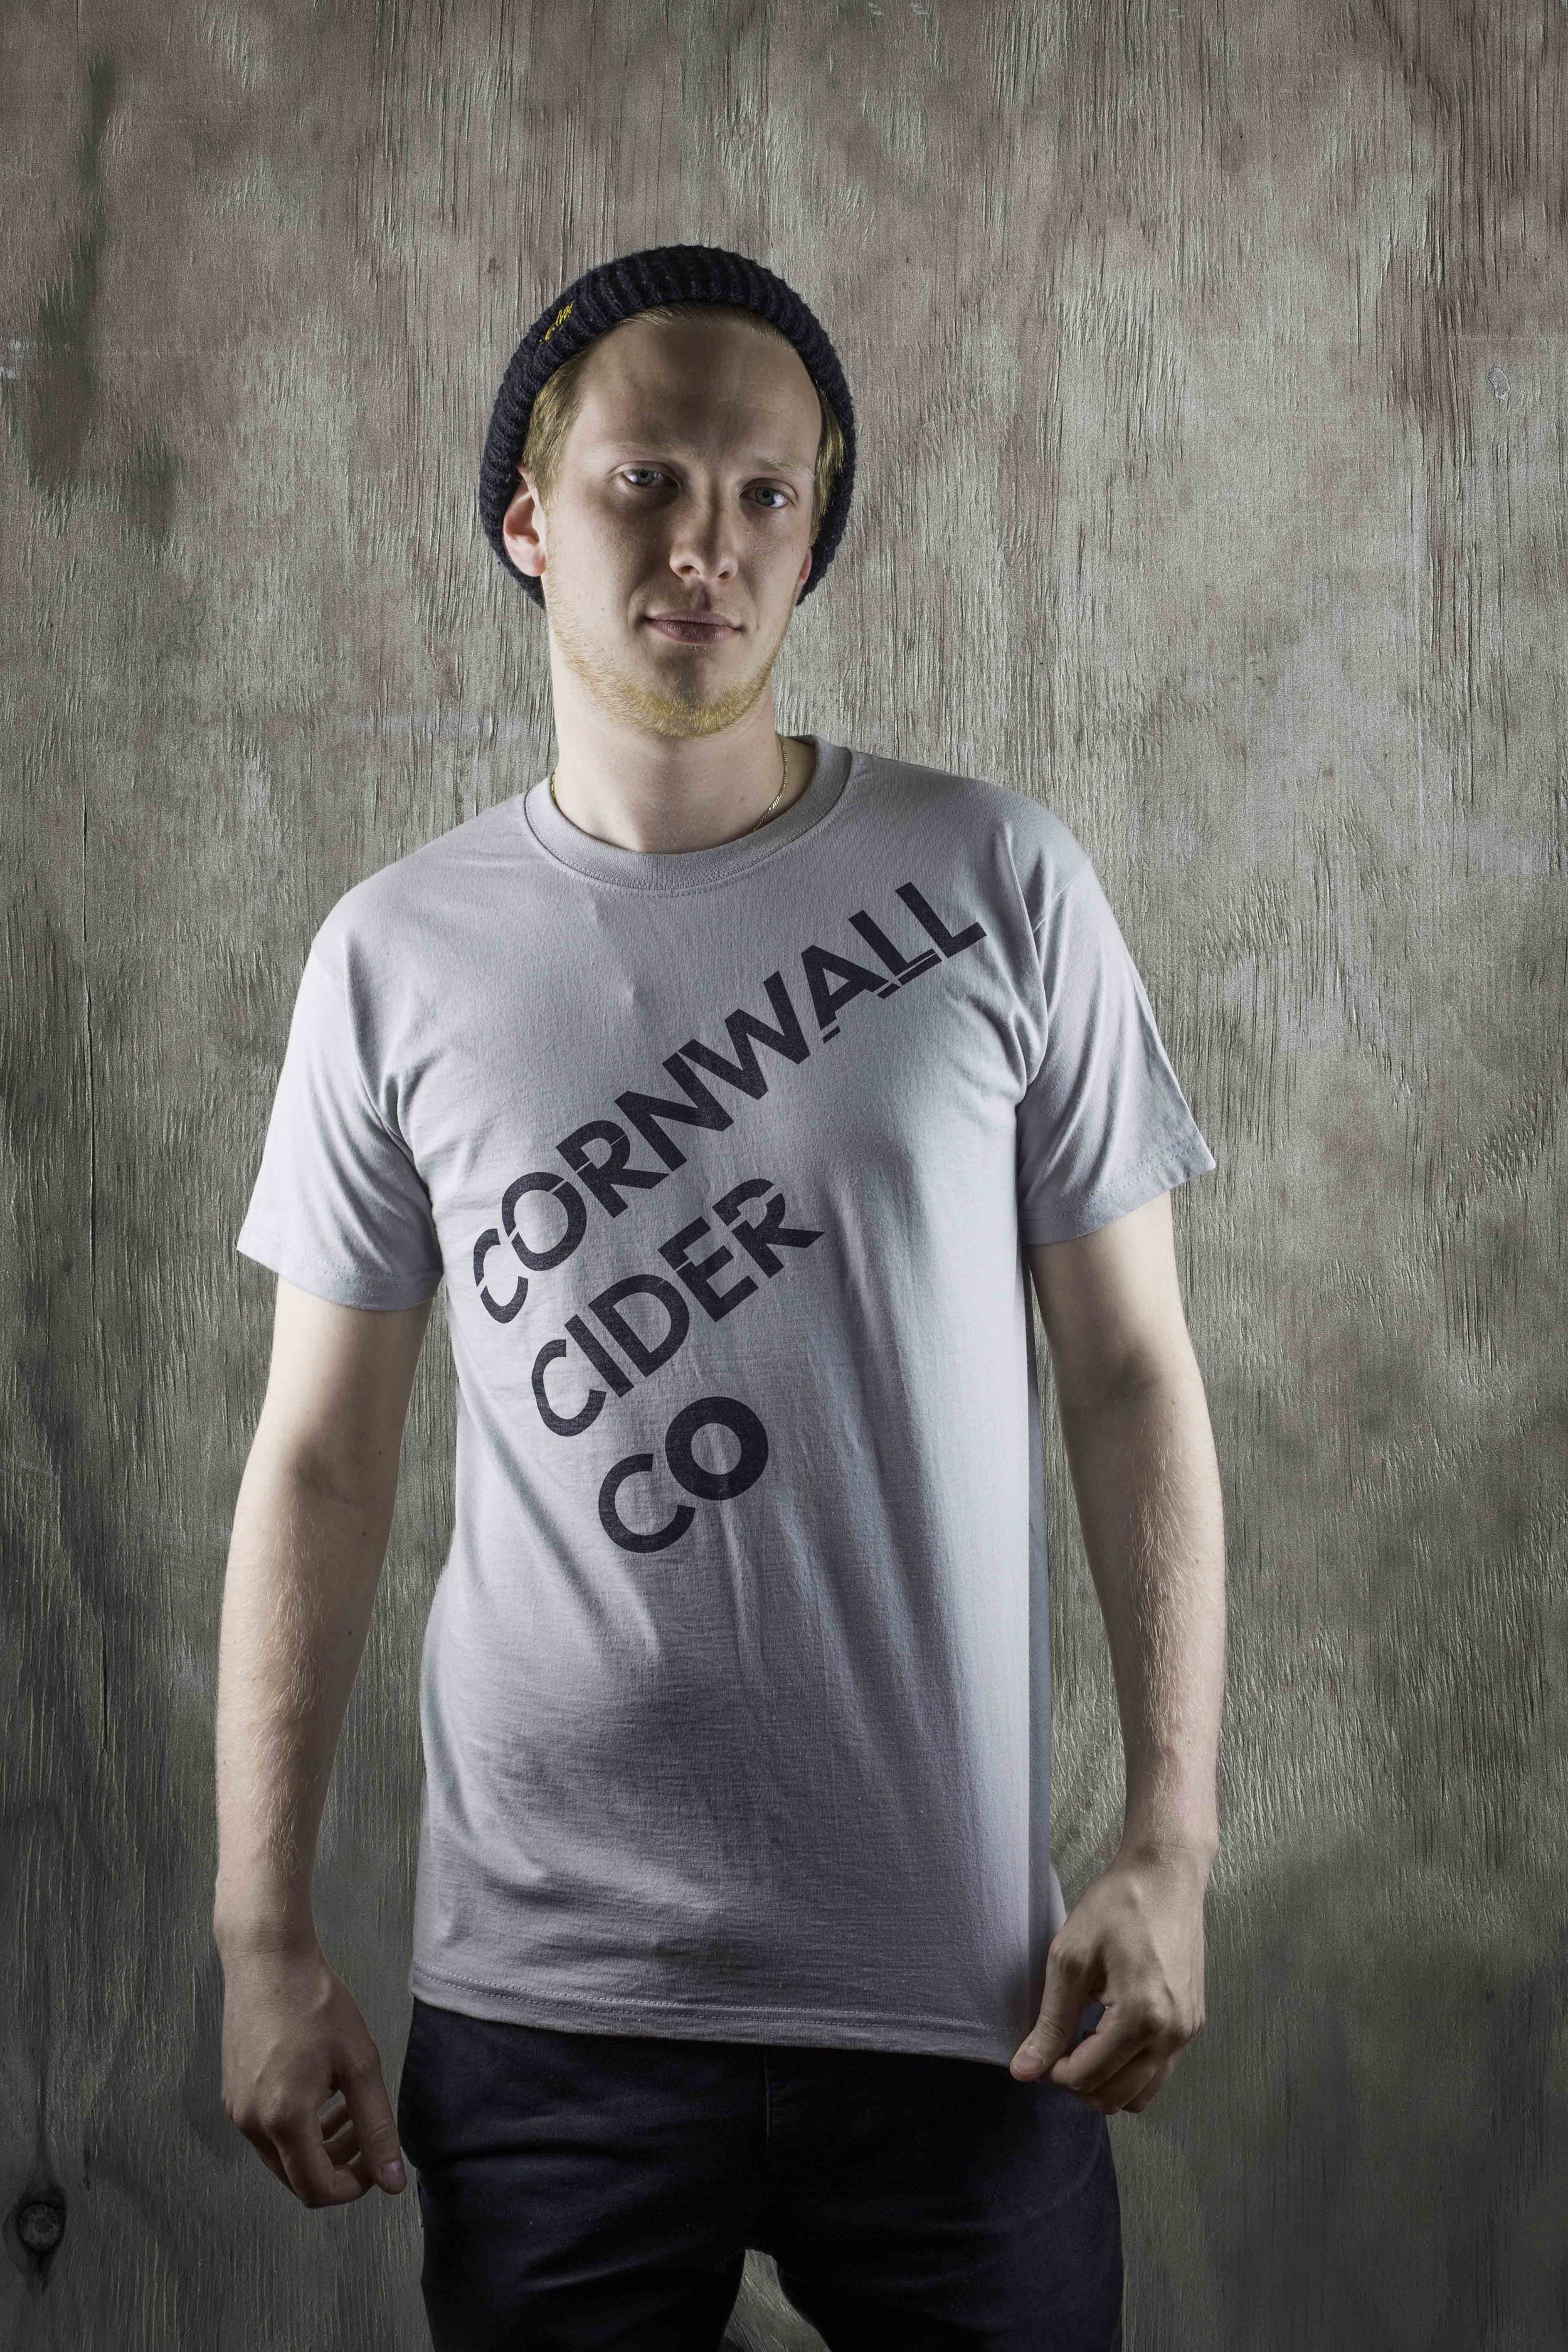 CCC-t-shirt-front-gray.jpg